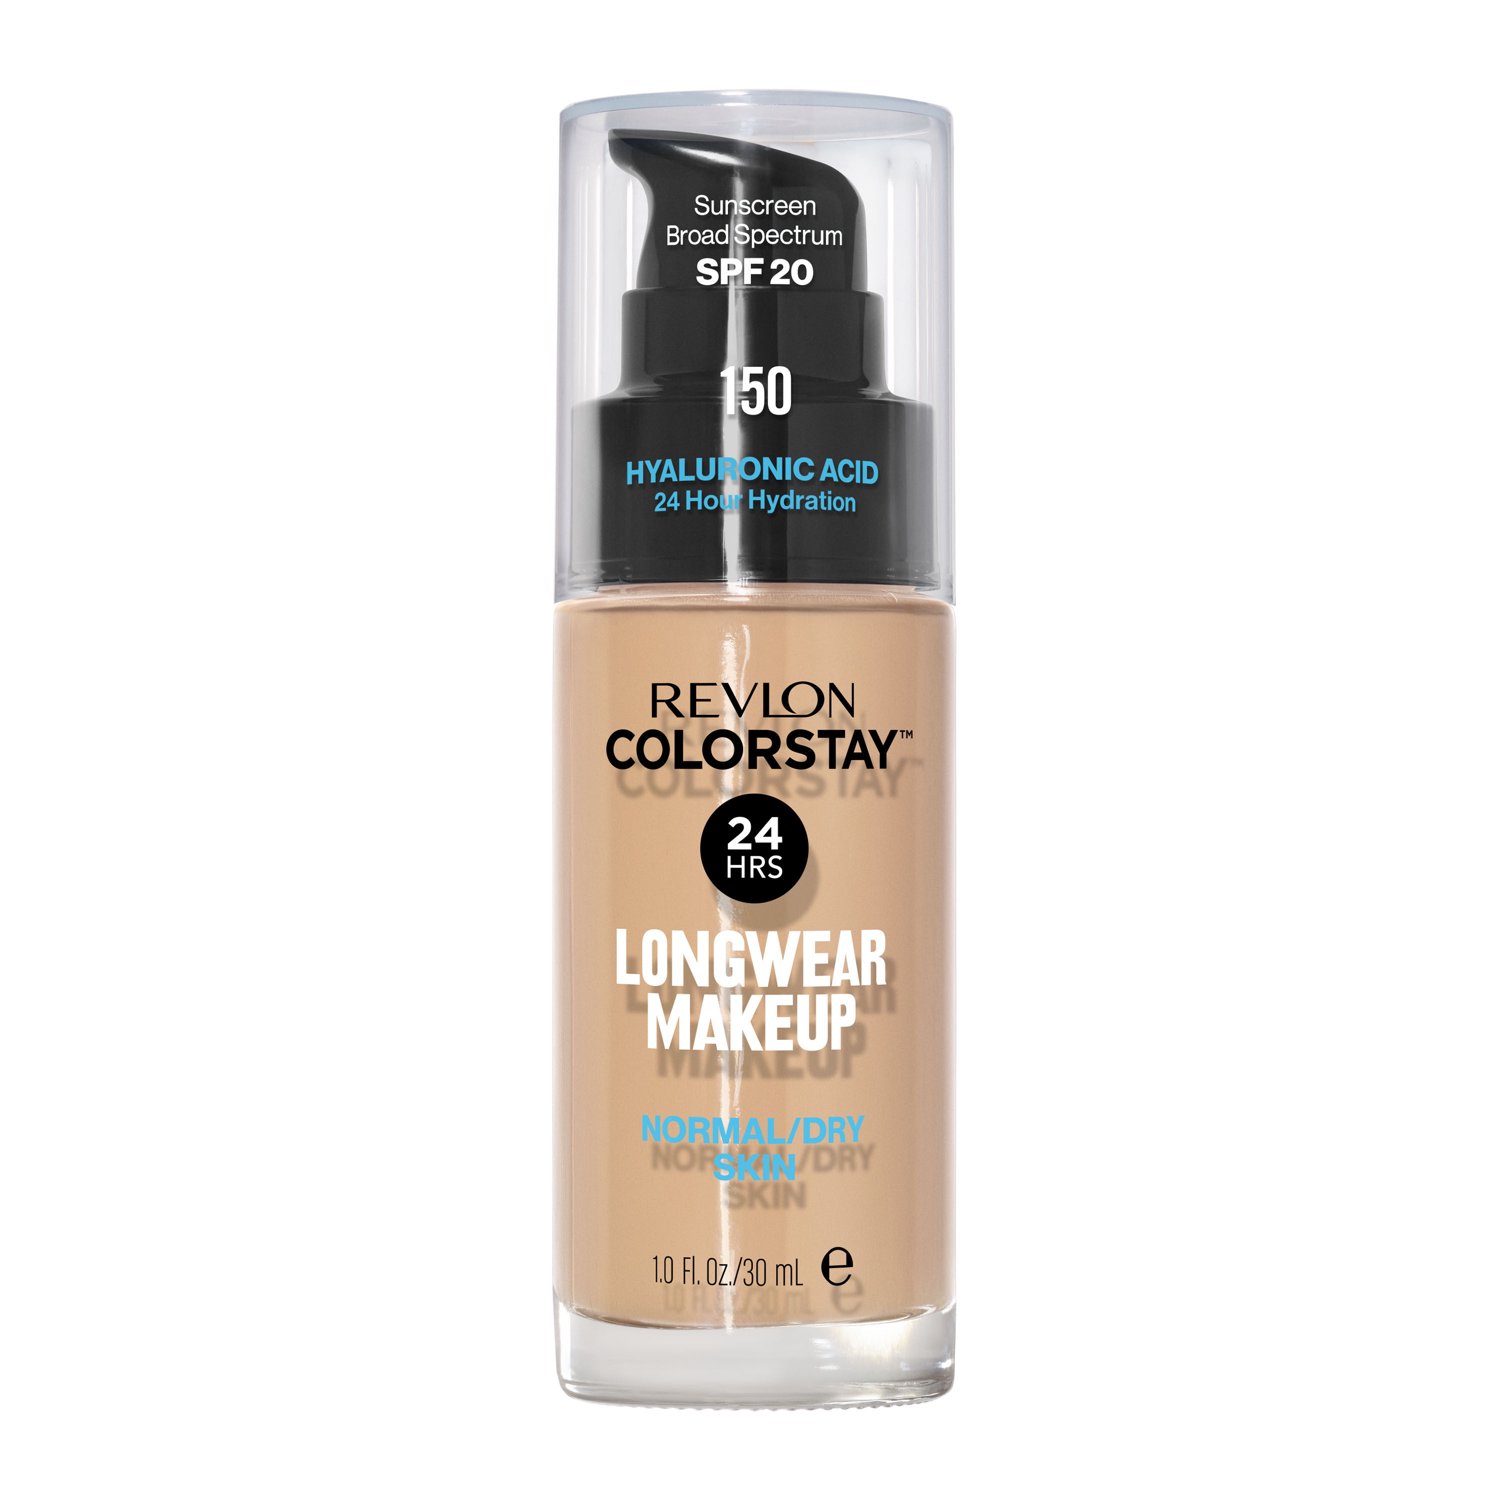 Revlon ColorStay Liquid Foundation Makeup, Normal/Dry Skin, SPF 20, 150 Buff, 1 fl oz - image 1 of 12